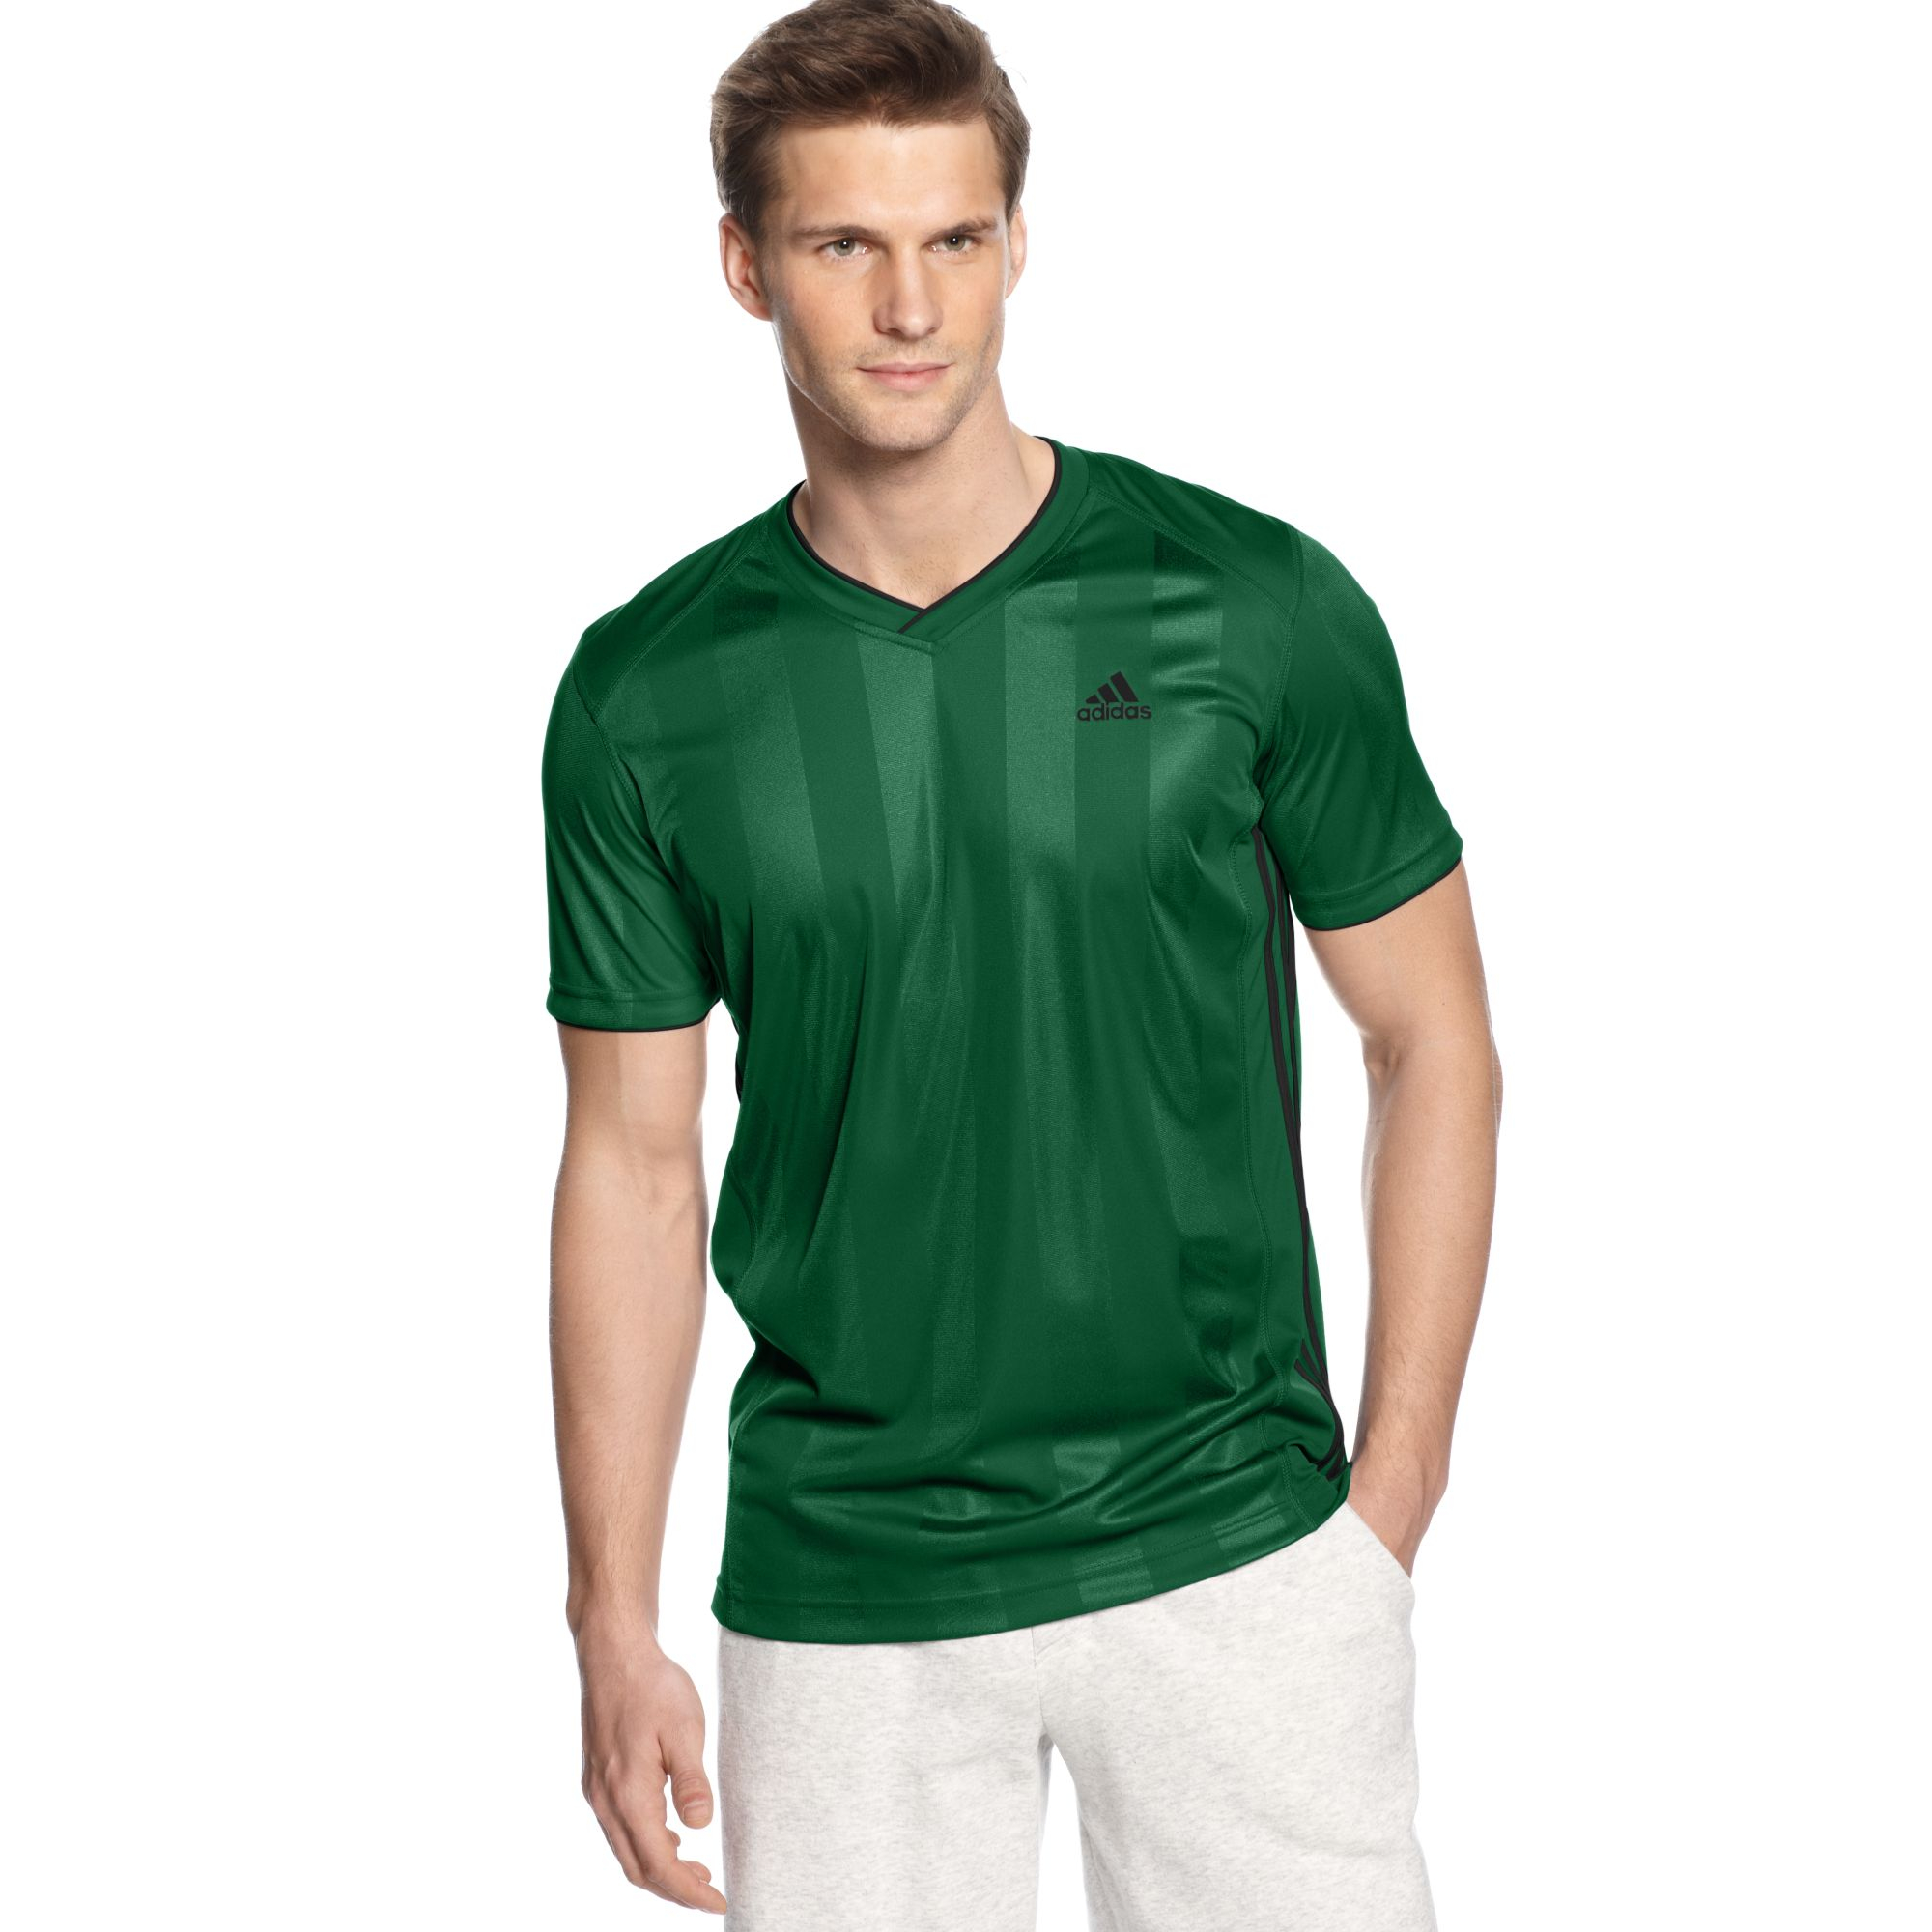 adidas Soccer Shirt Vneck Soccer Jersey in Green for Men - Lyst